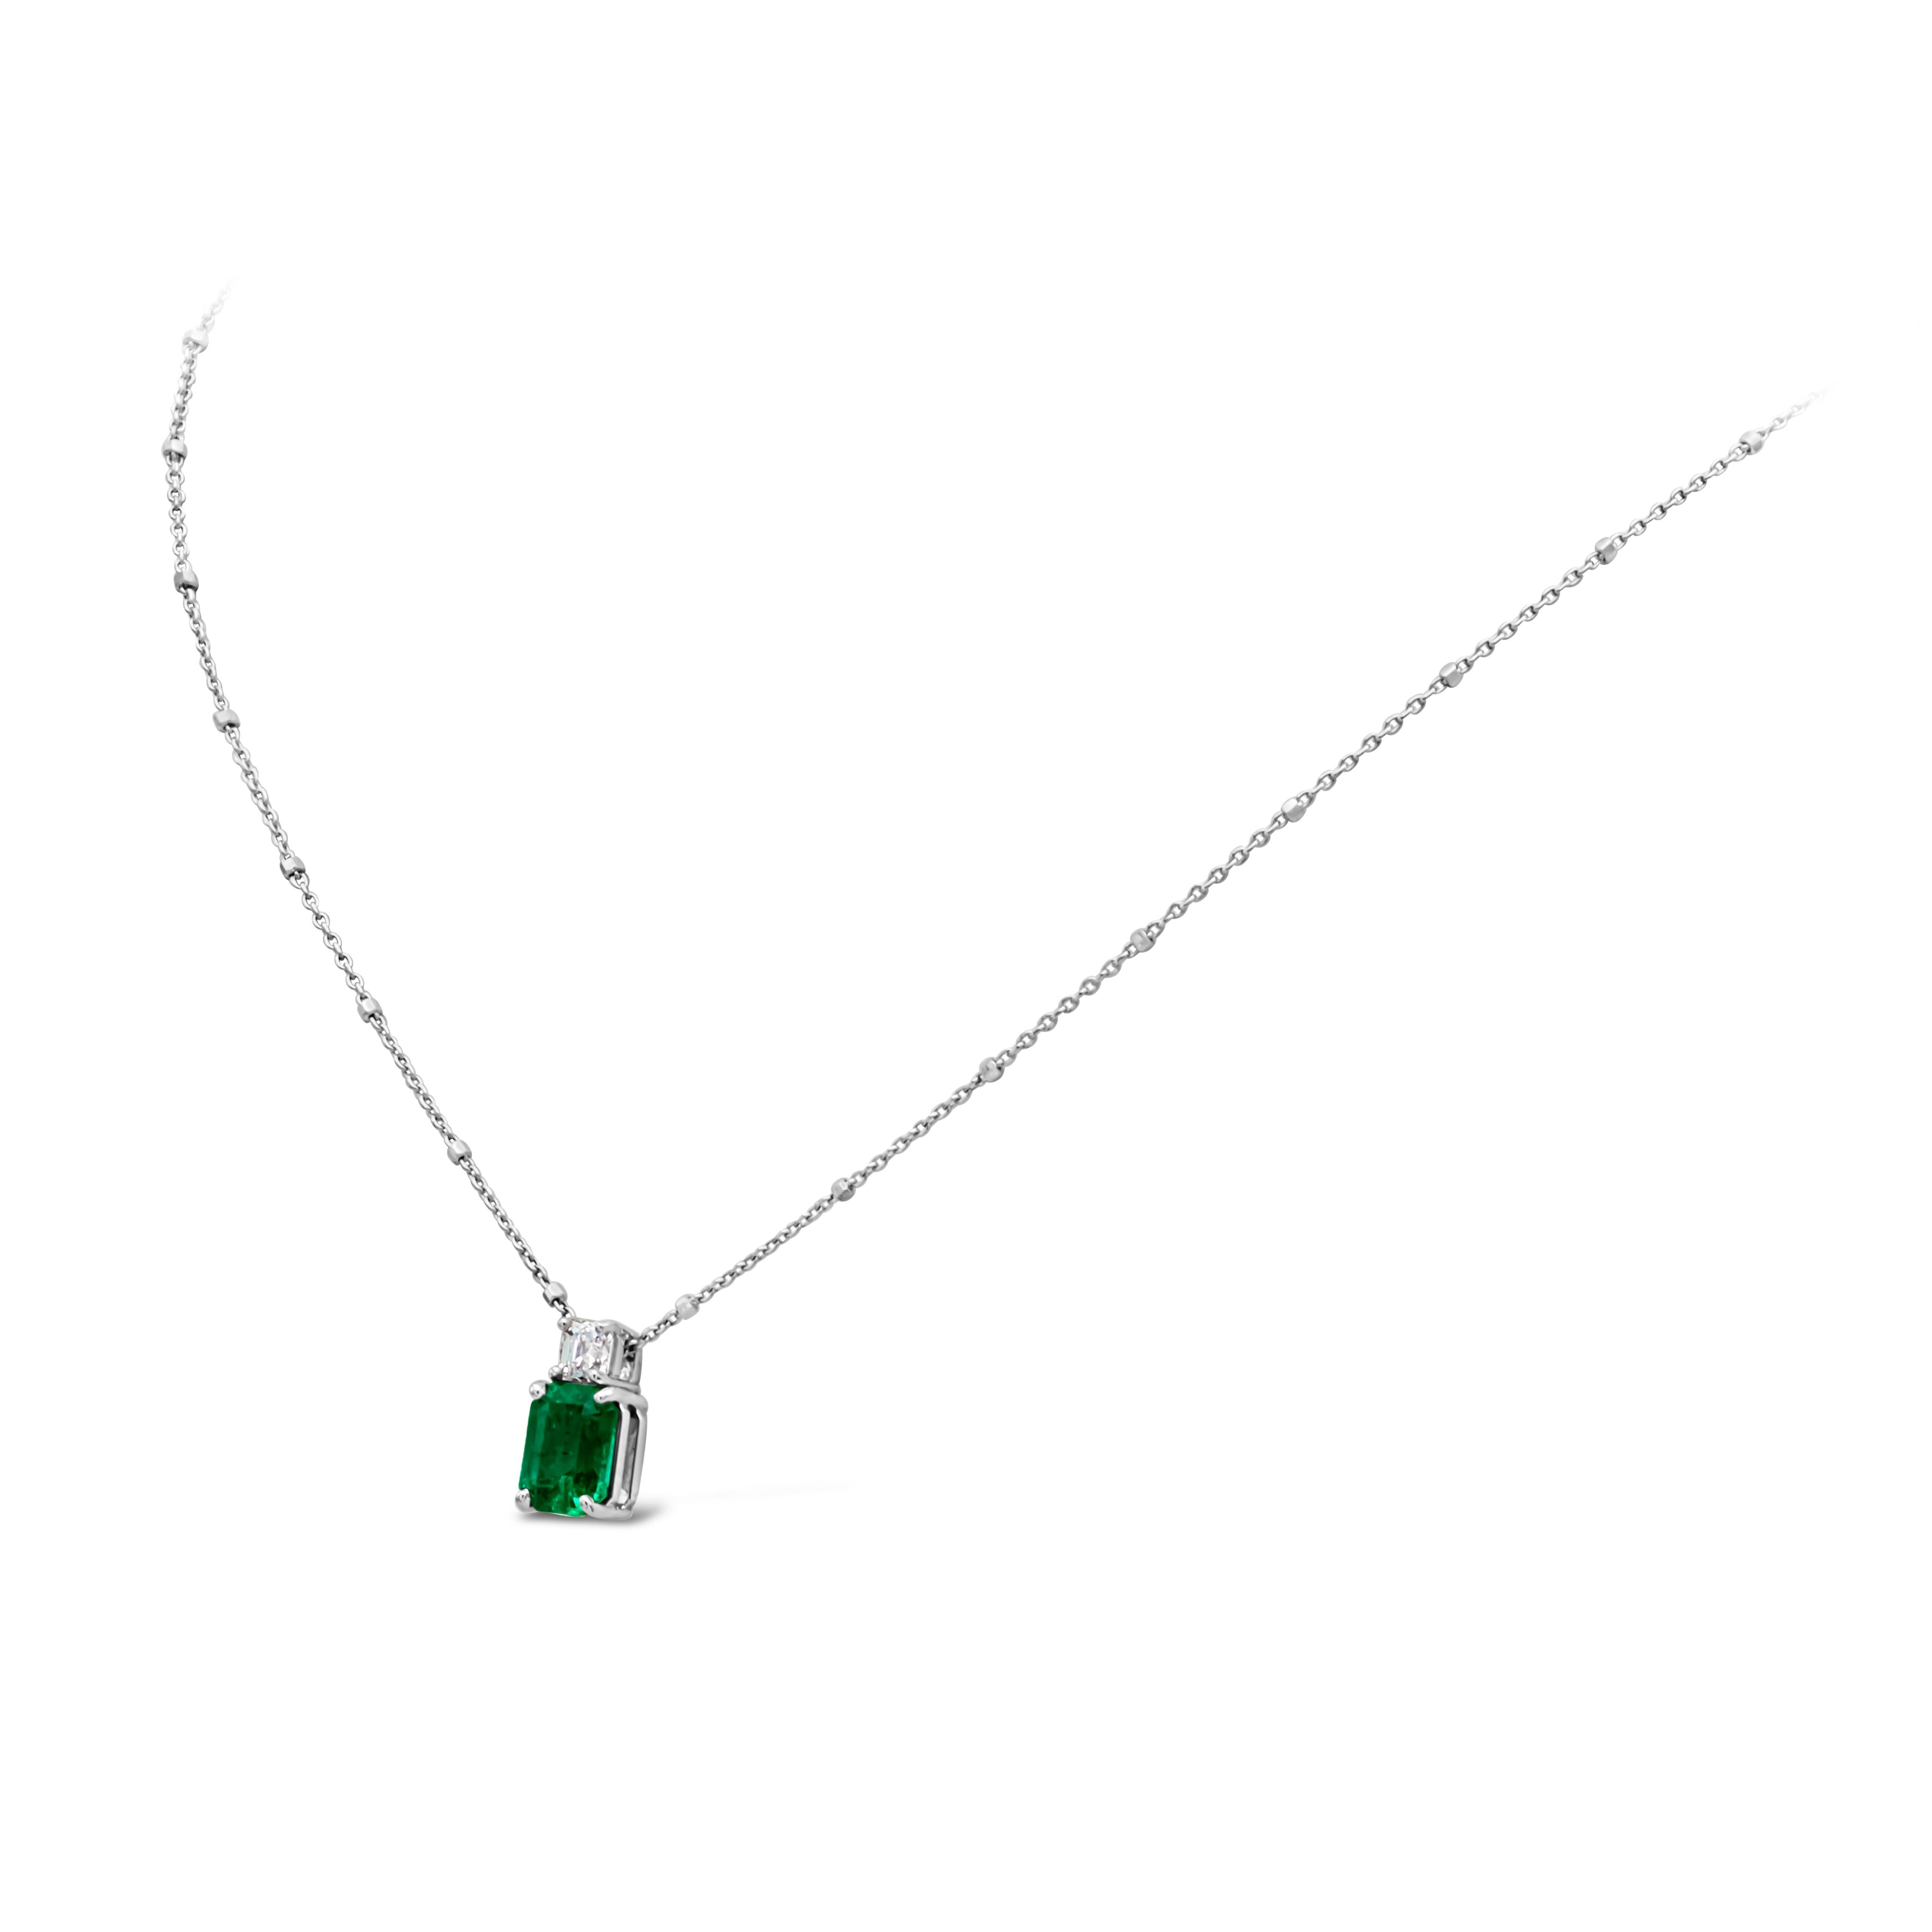 Contemporary Roman Malakov 1.27 Carat Emerald Cut Green Emerald and Diamond Pendant Necklace For Sale